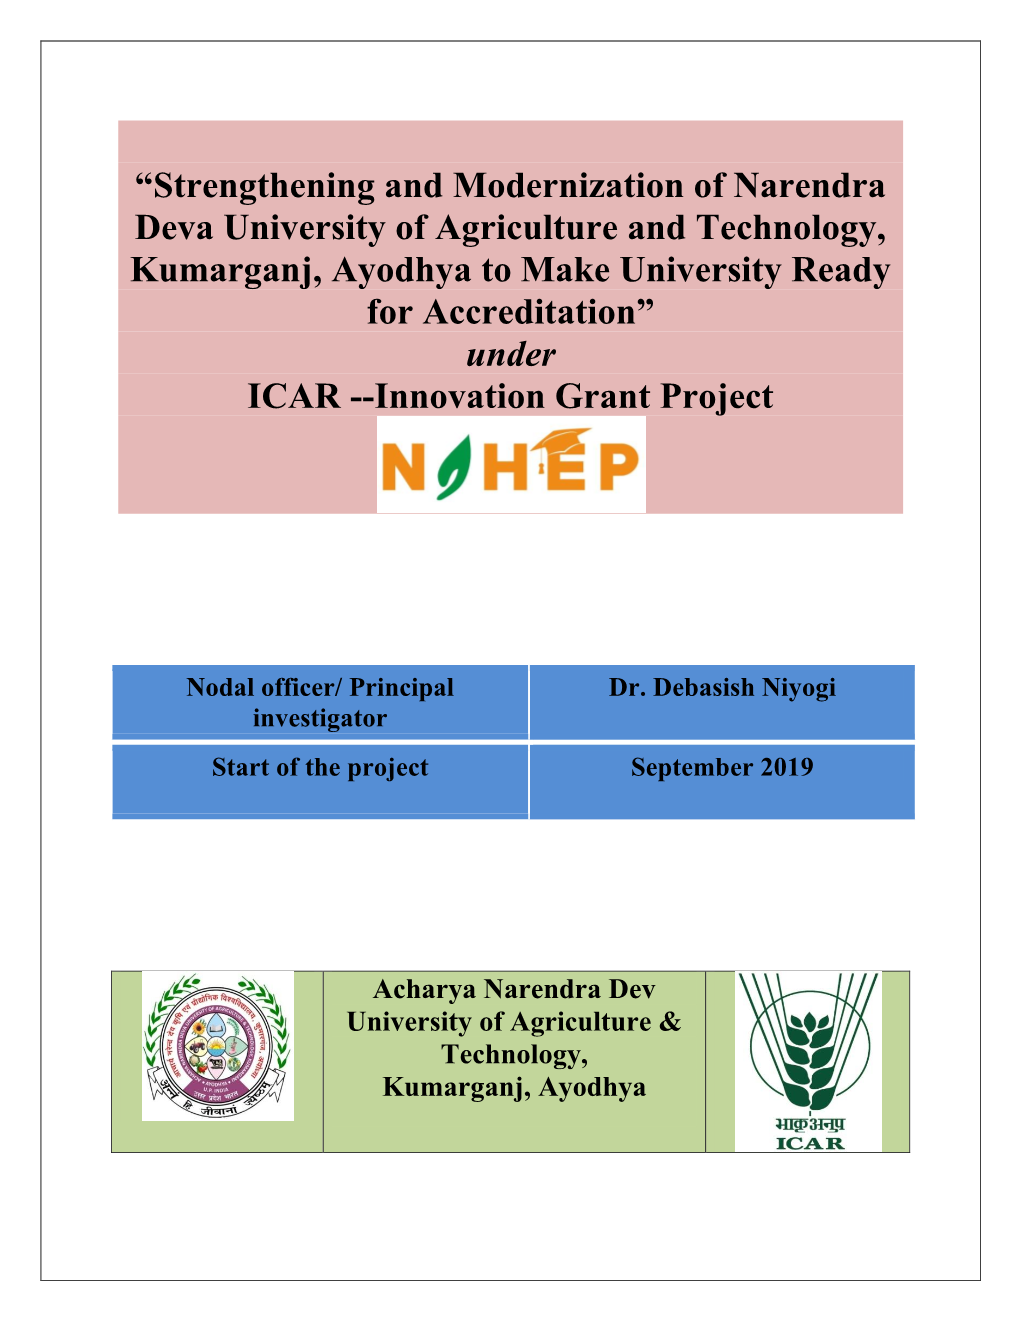 Strengthening and Modernization of Narendra Deva University